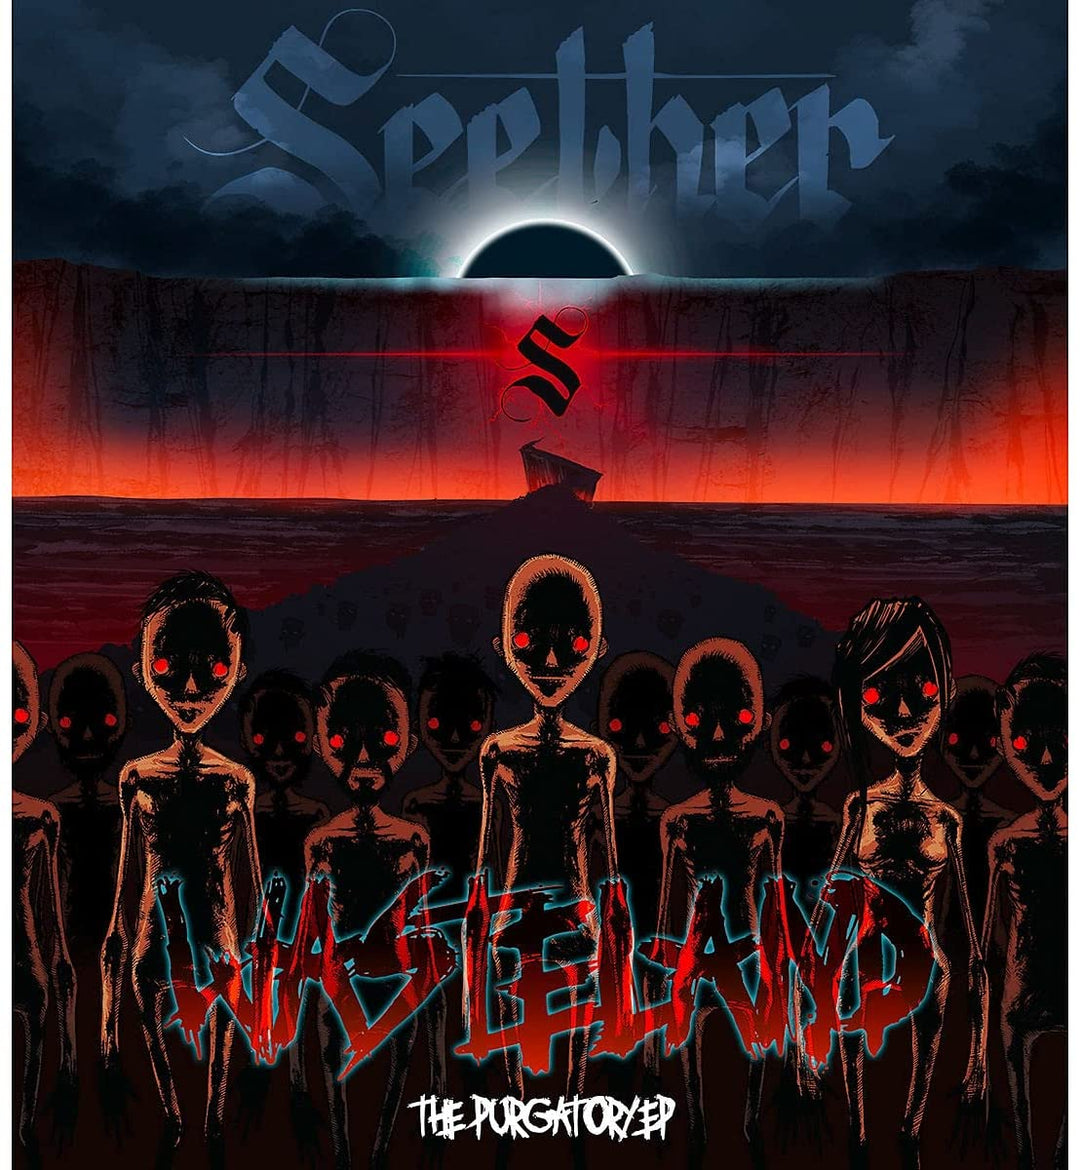 Seether - Wasteland - The Purgatory EP [Audio CD]